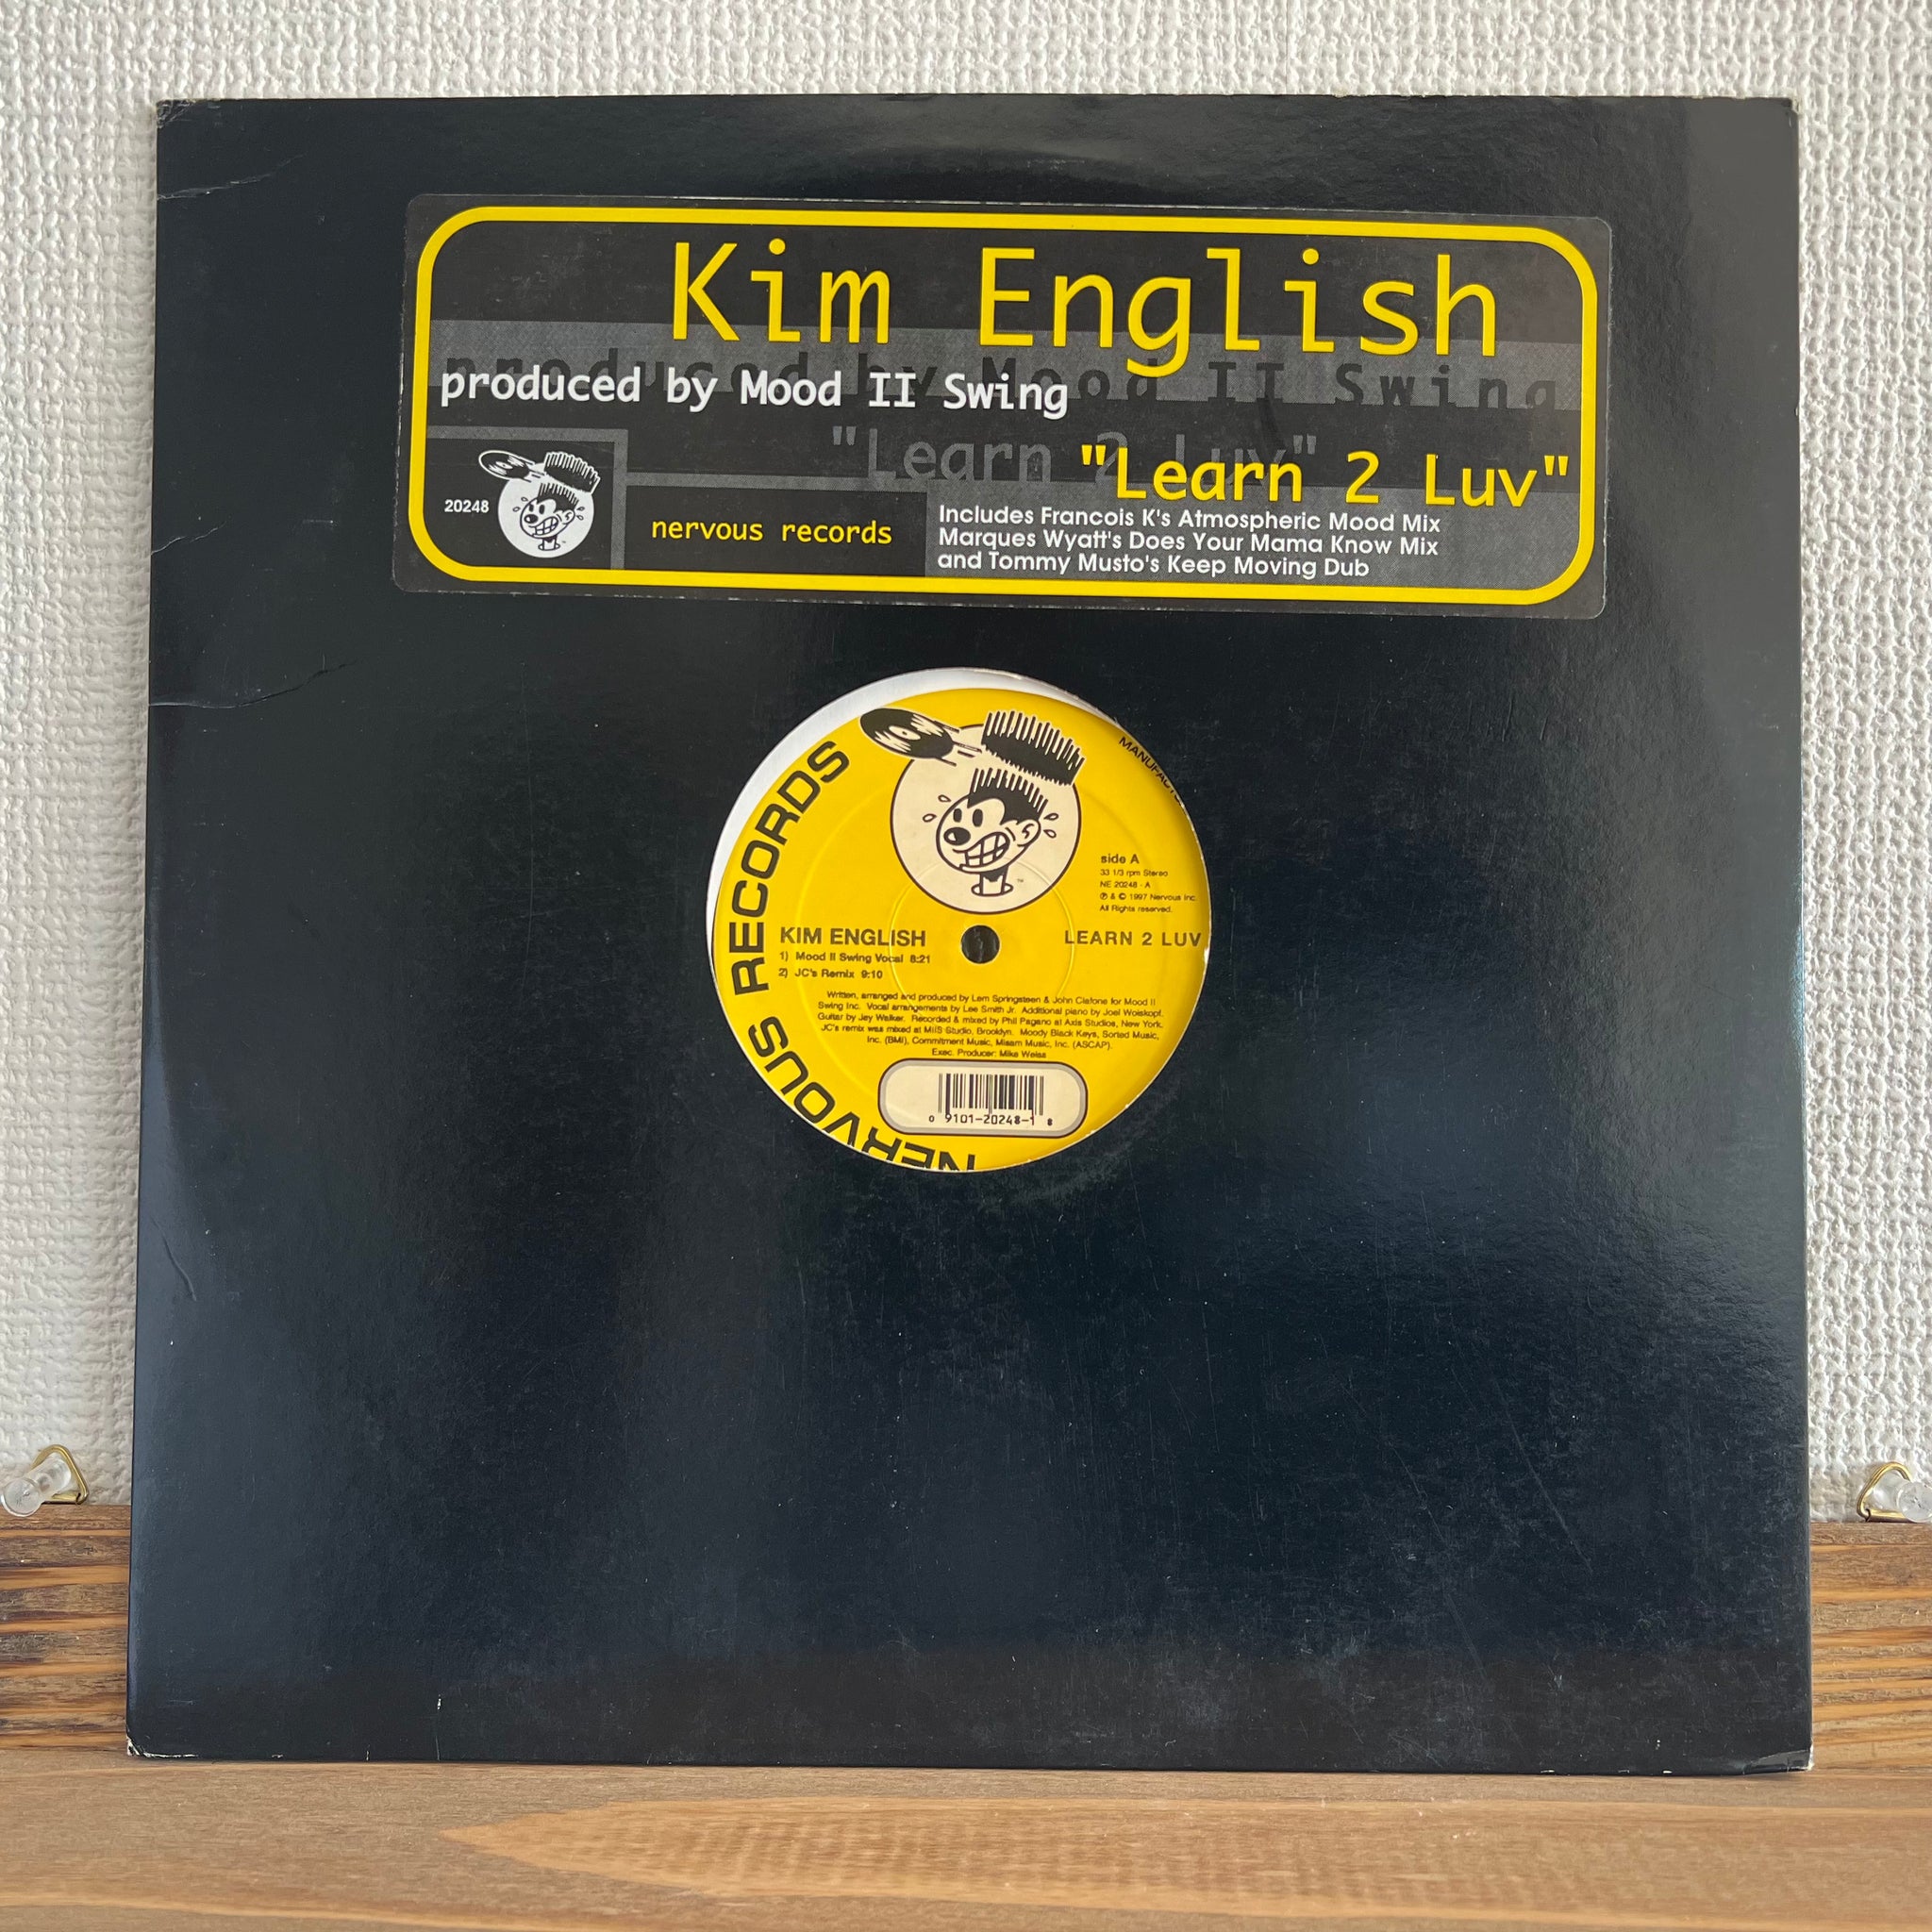 Kim English - Learn 2 Luv